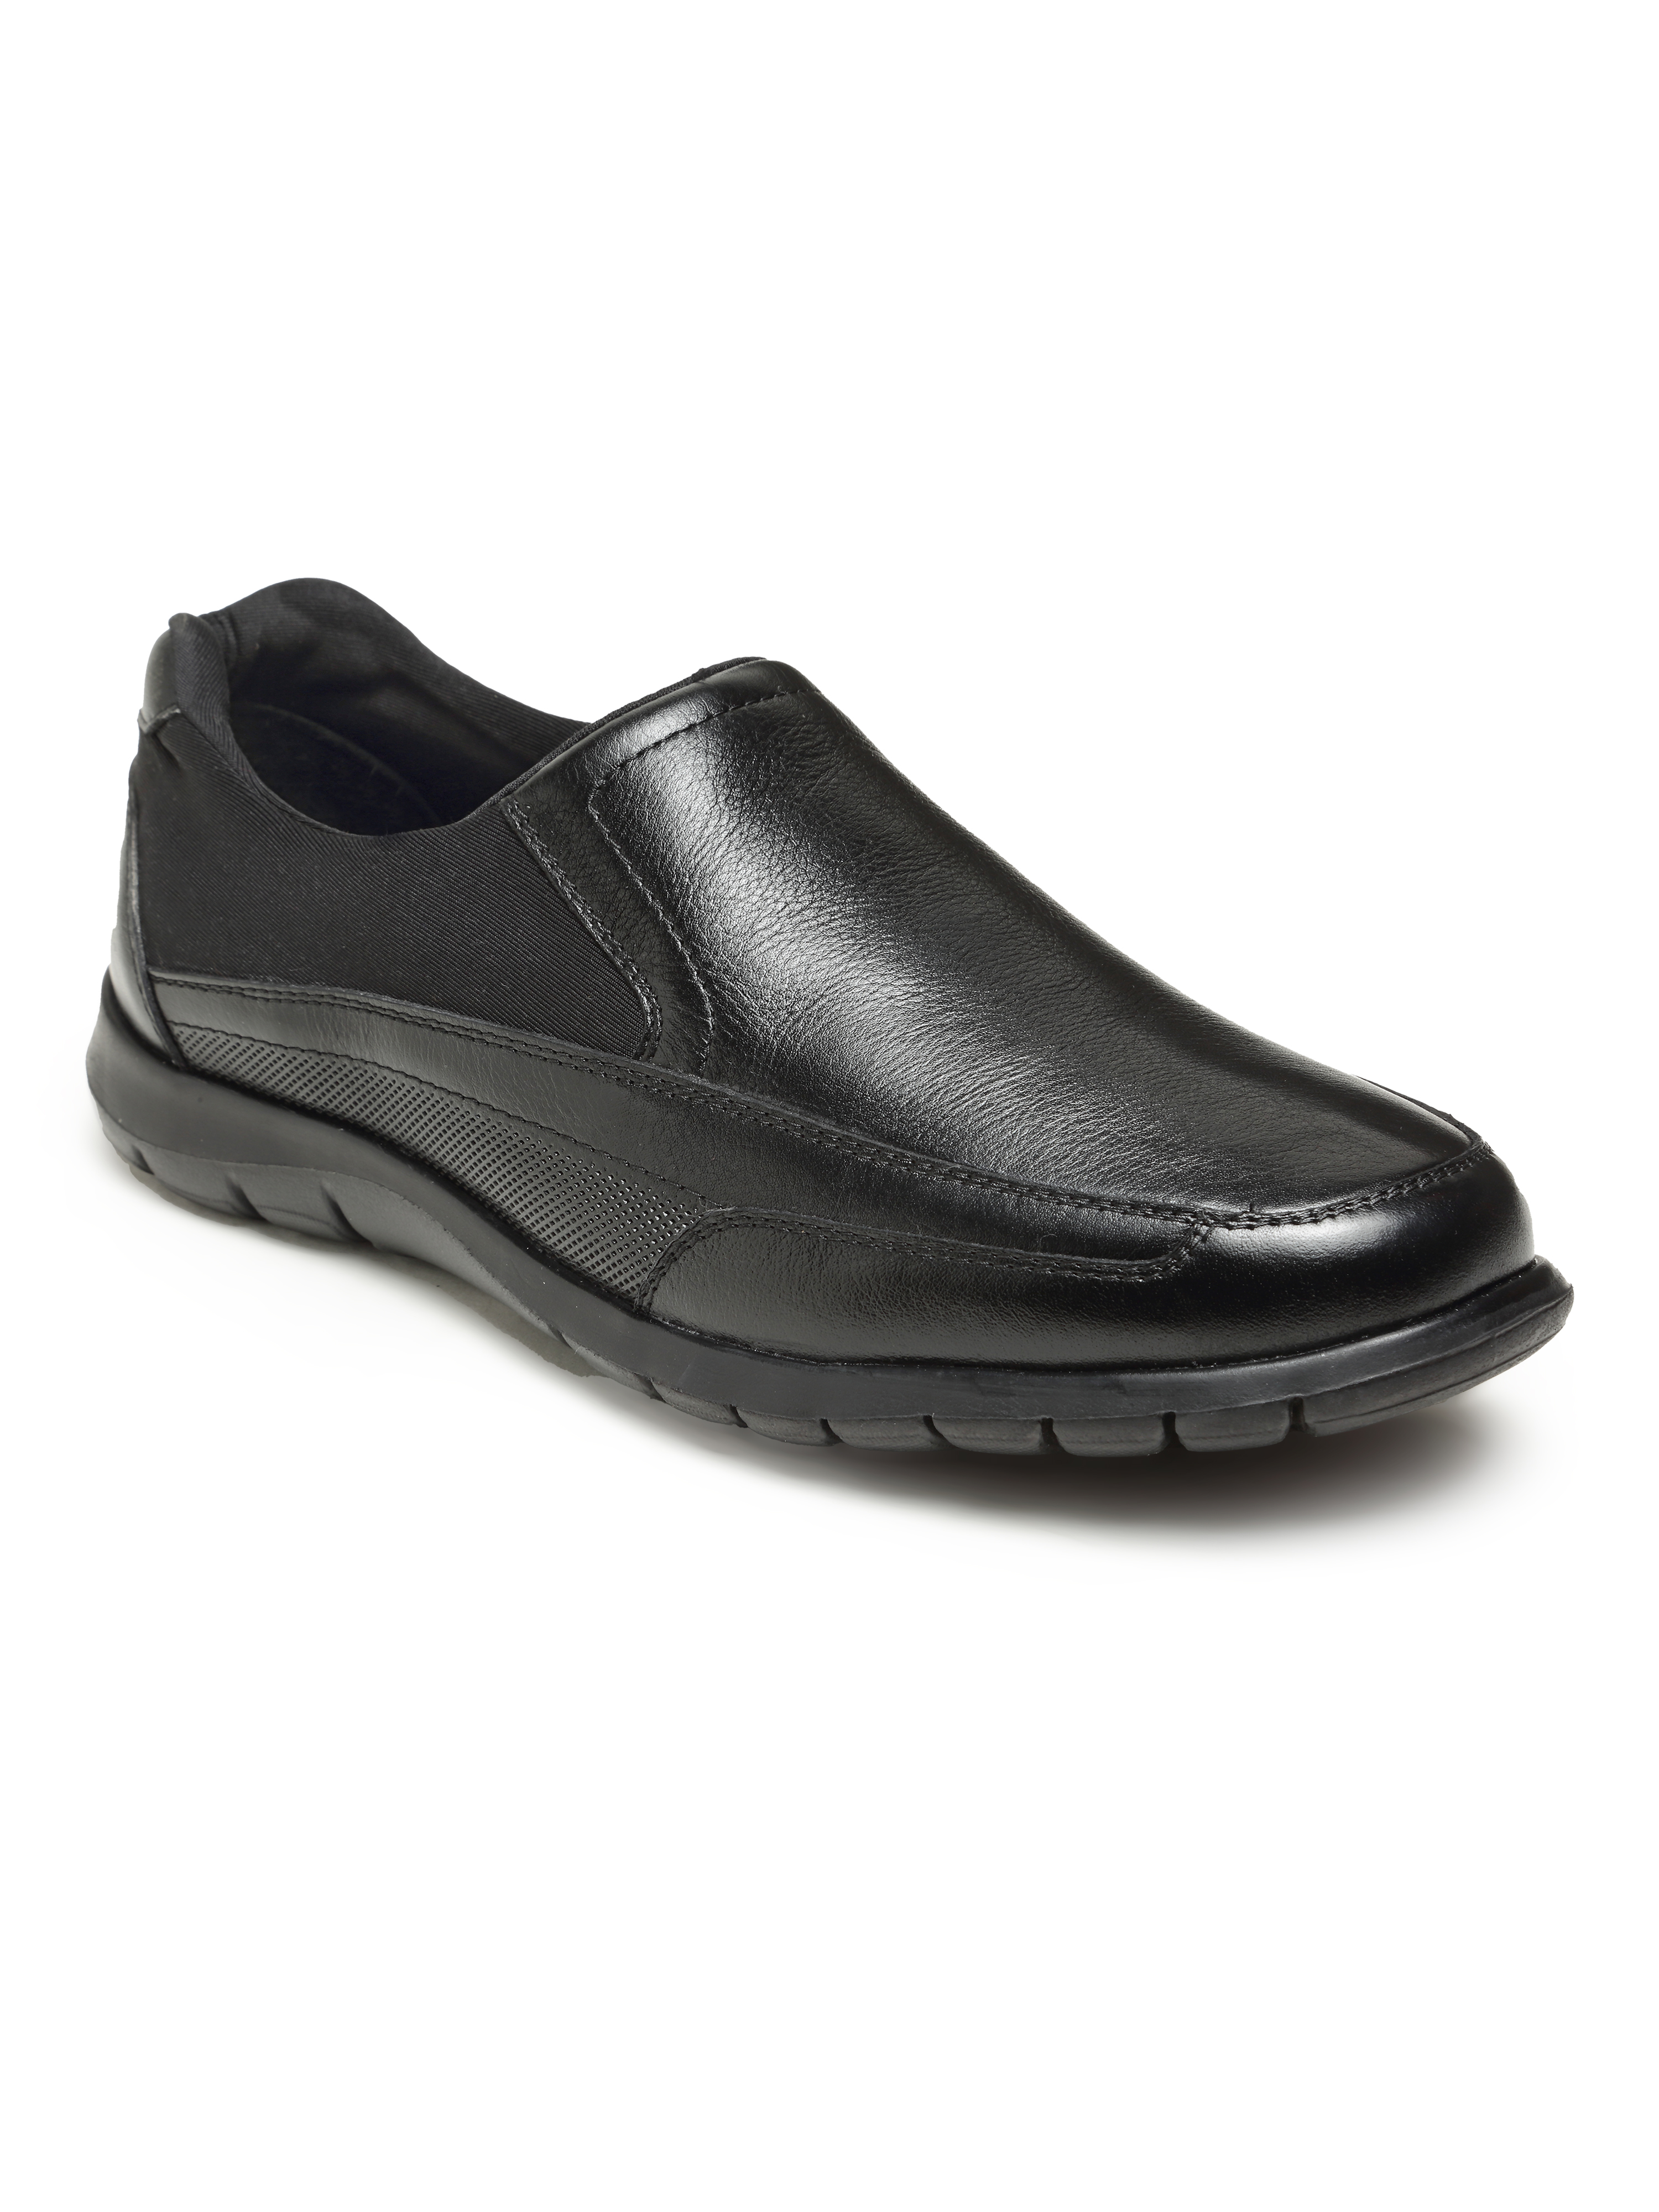 Buy VON WELLX IGOR BLACK SHOES(SPECIALLY FOR DIABETIC FOOT) In Delhi